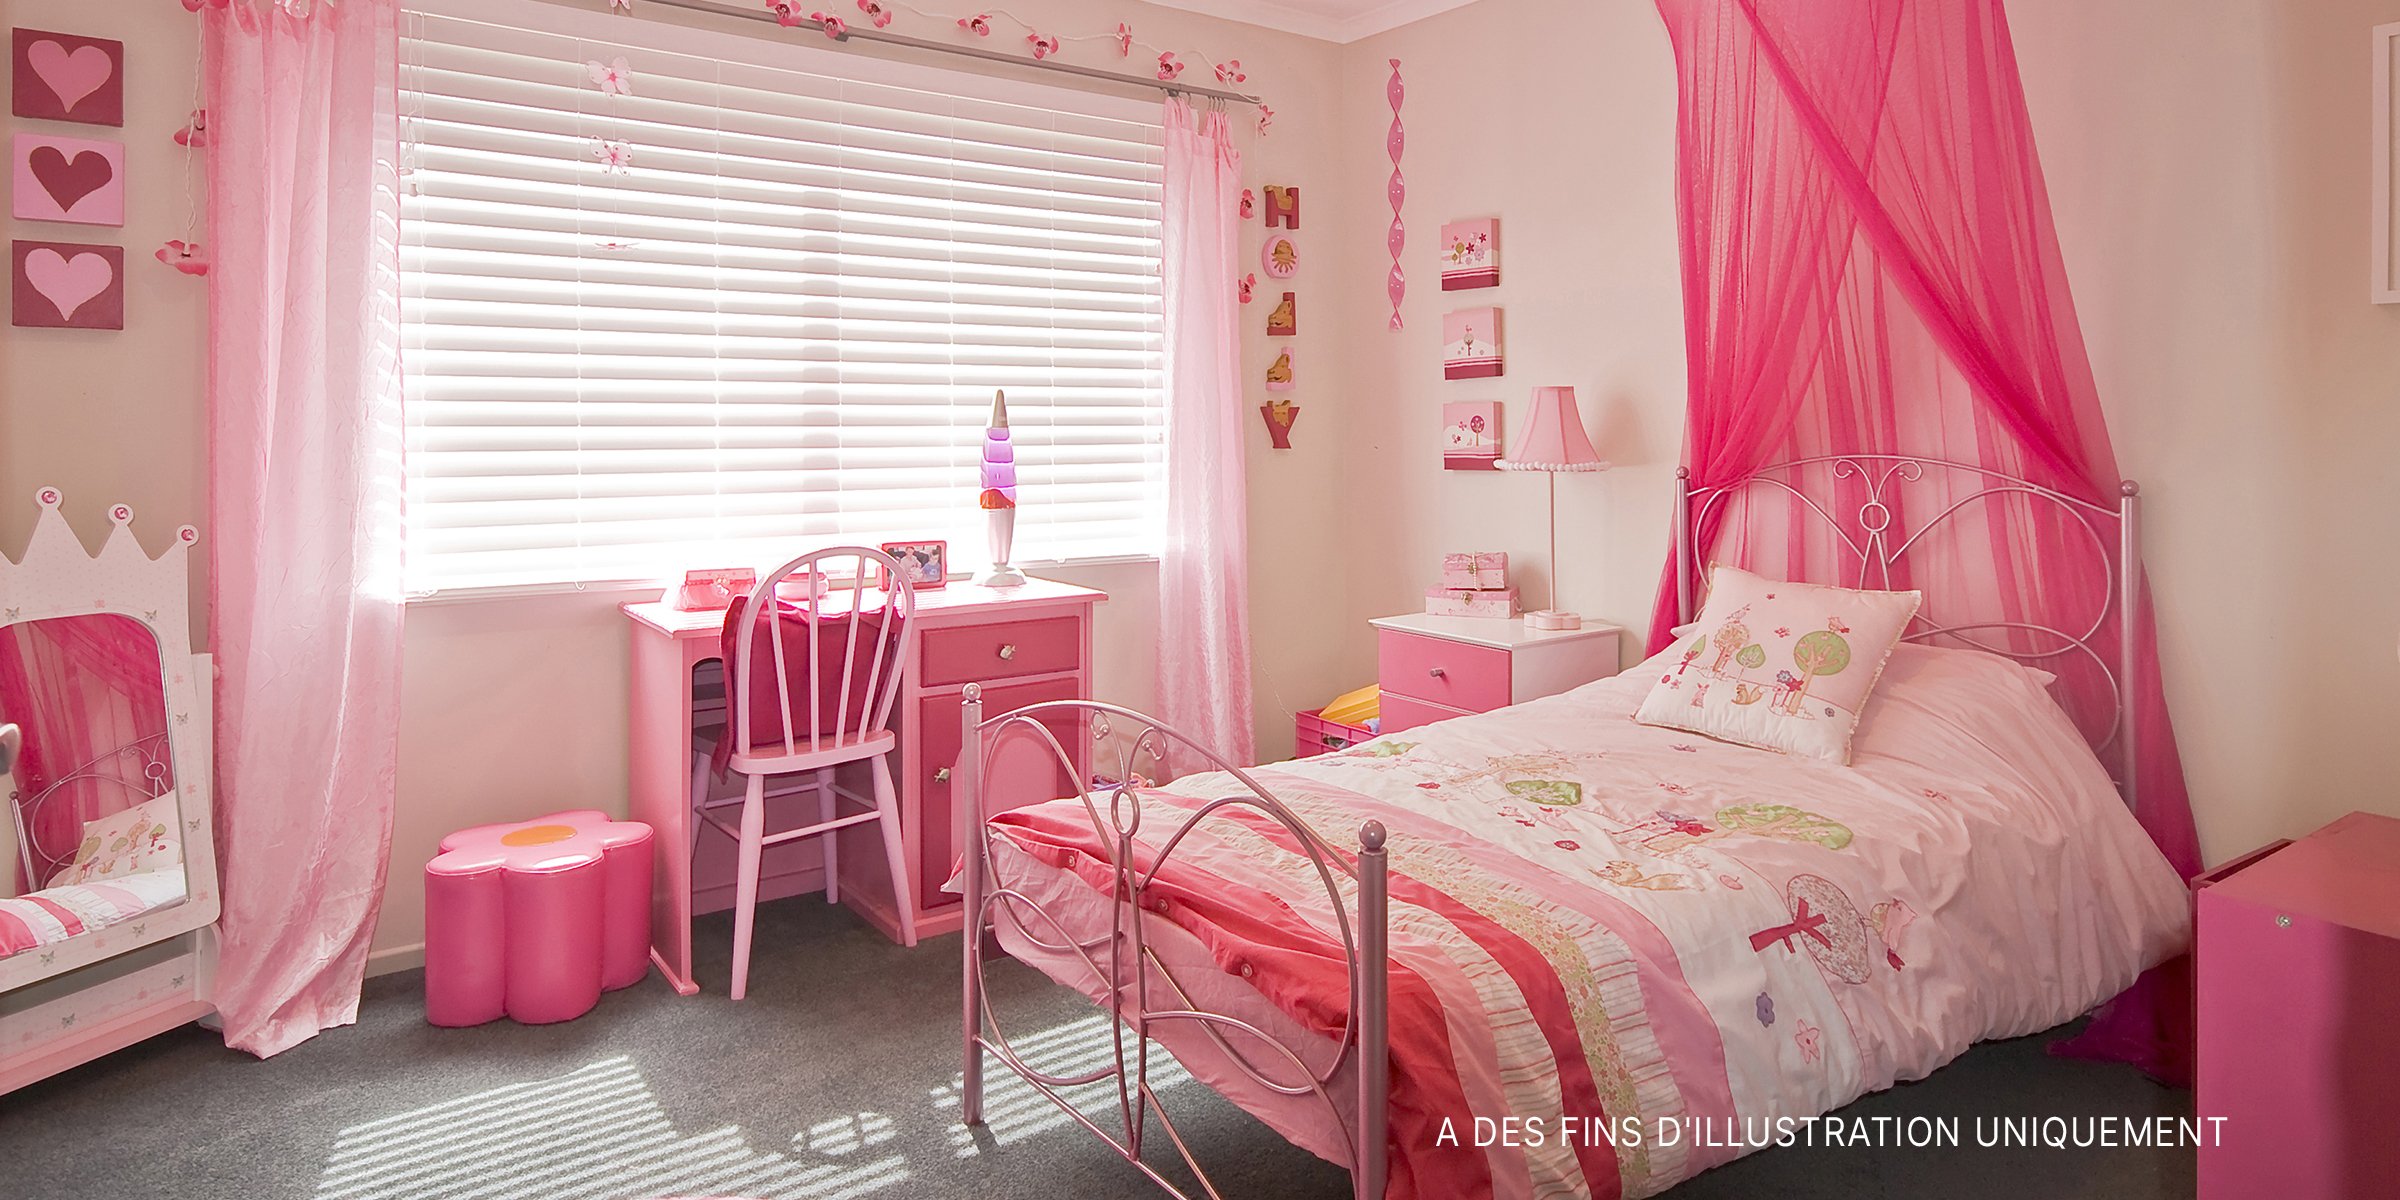 Une jolie chambre rose | Source : Shutterstock   